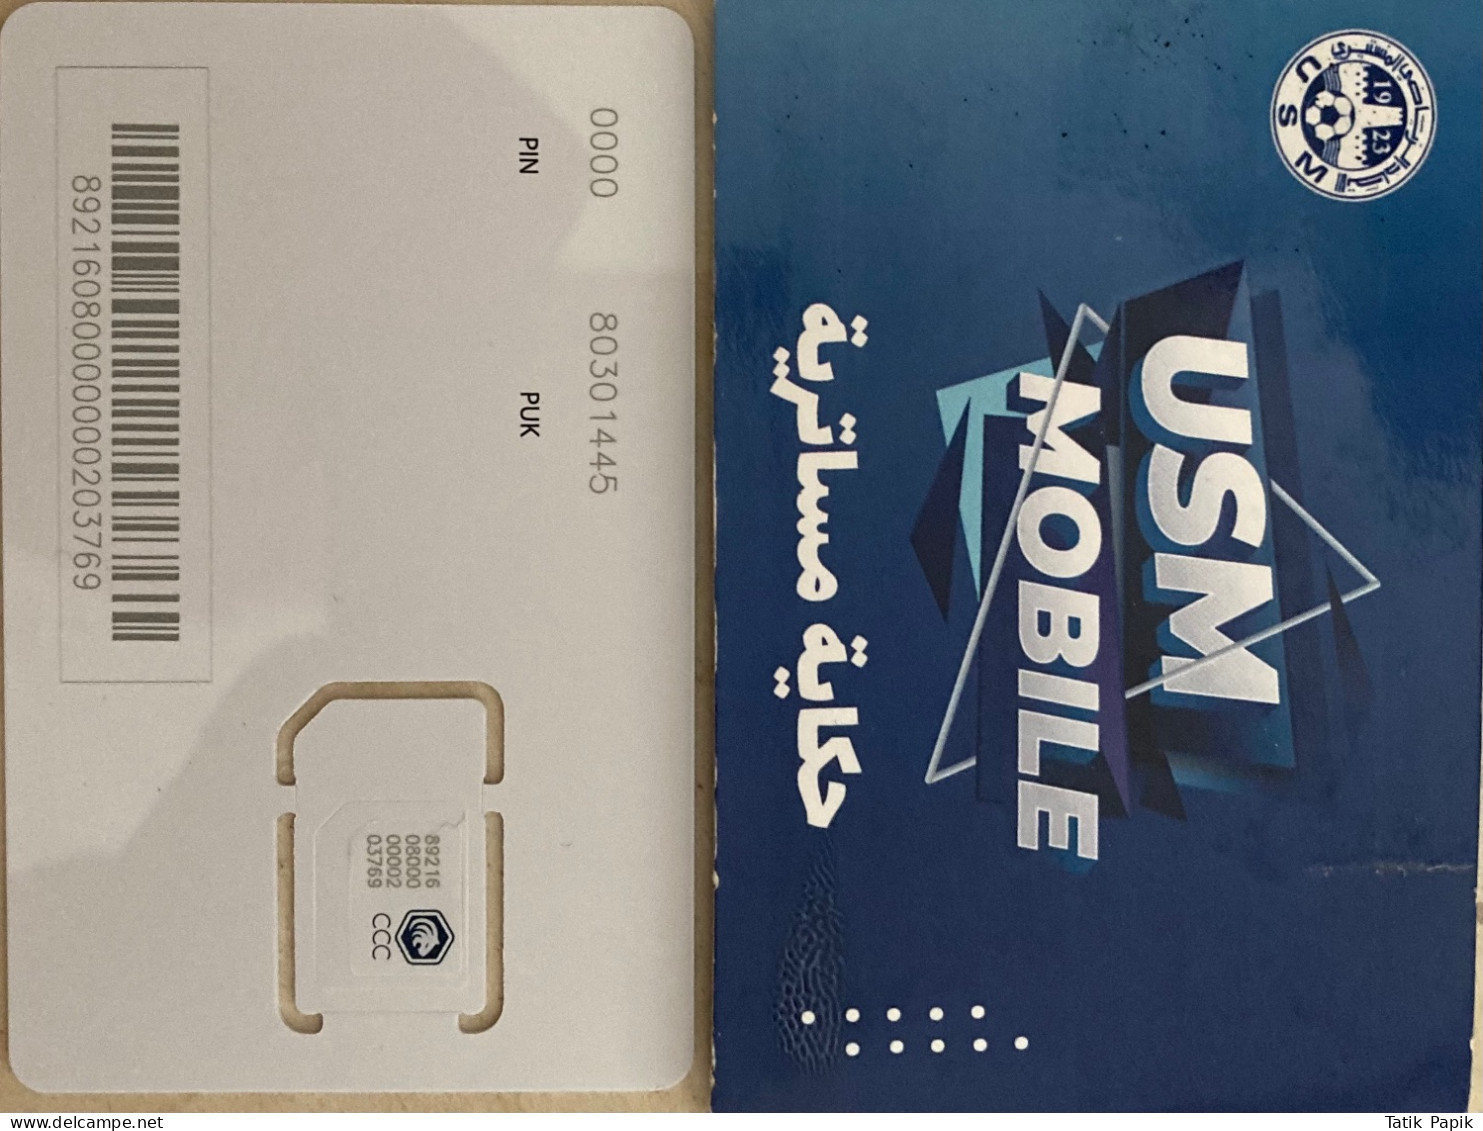 Tunisie Tunisia Phone Card Telephone Football Club SIM GSM Never Used Mobile USM Monastir Football New 3G 4G 5G - Tunisie